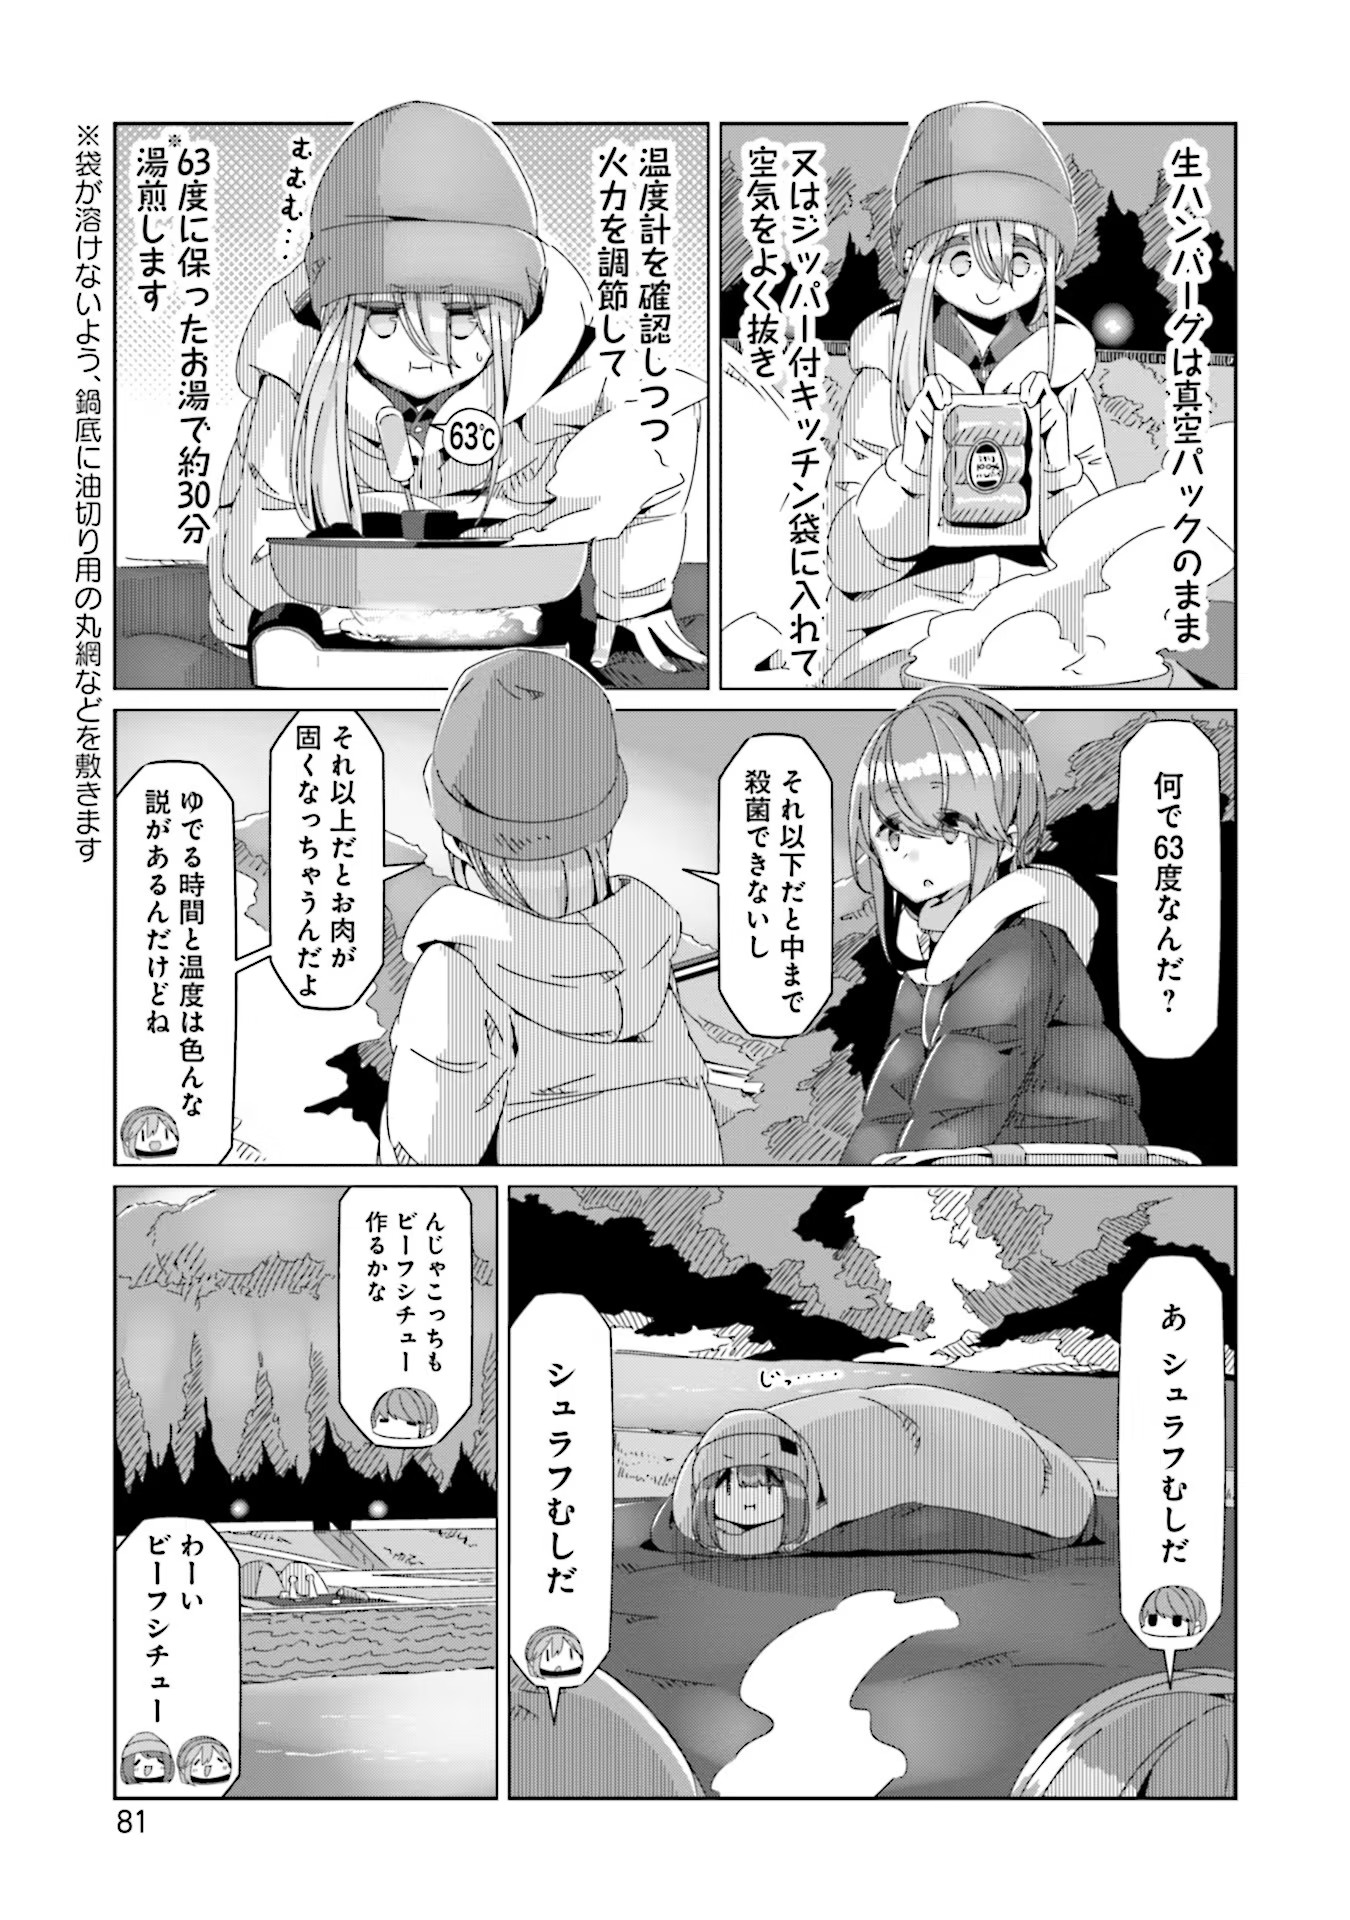 Yuru Camp - Chapter 61 - Page 1